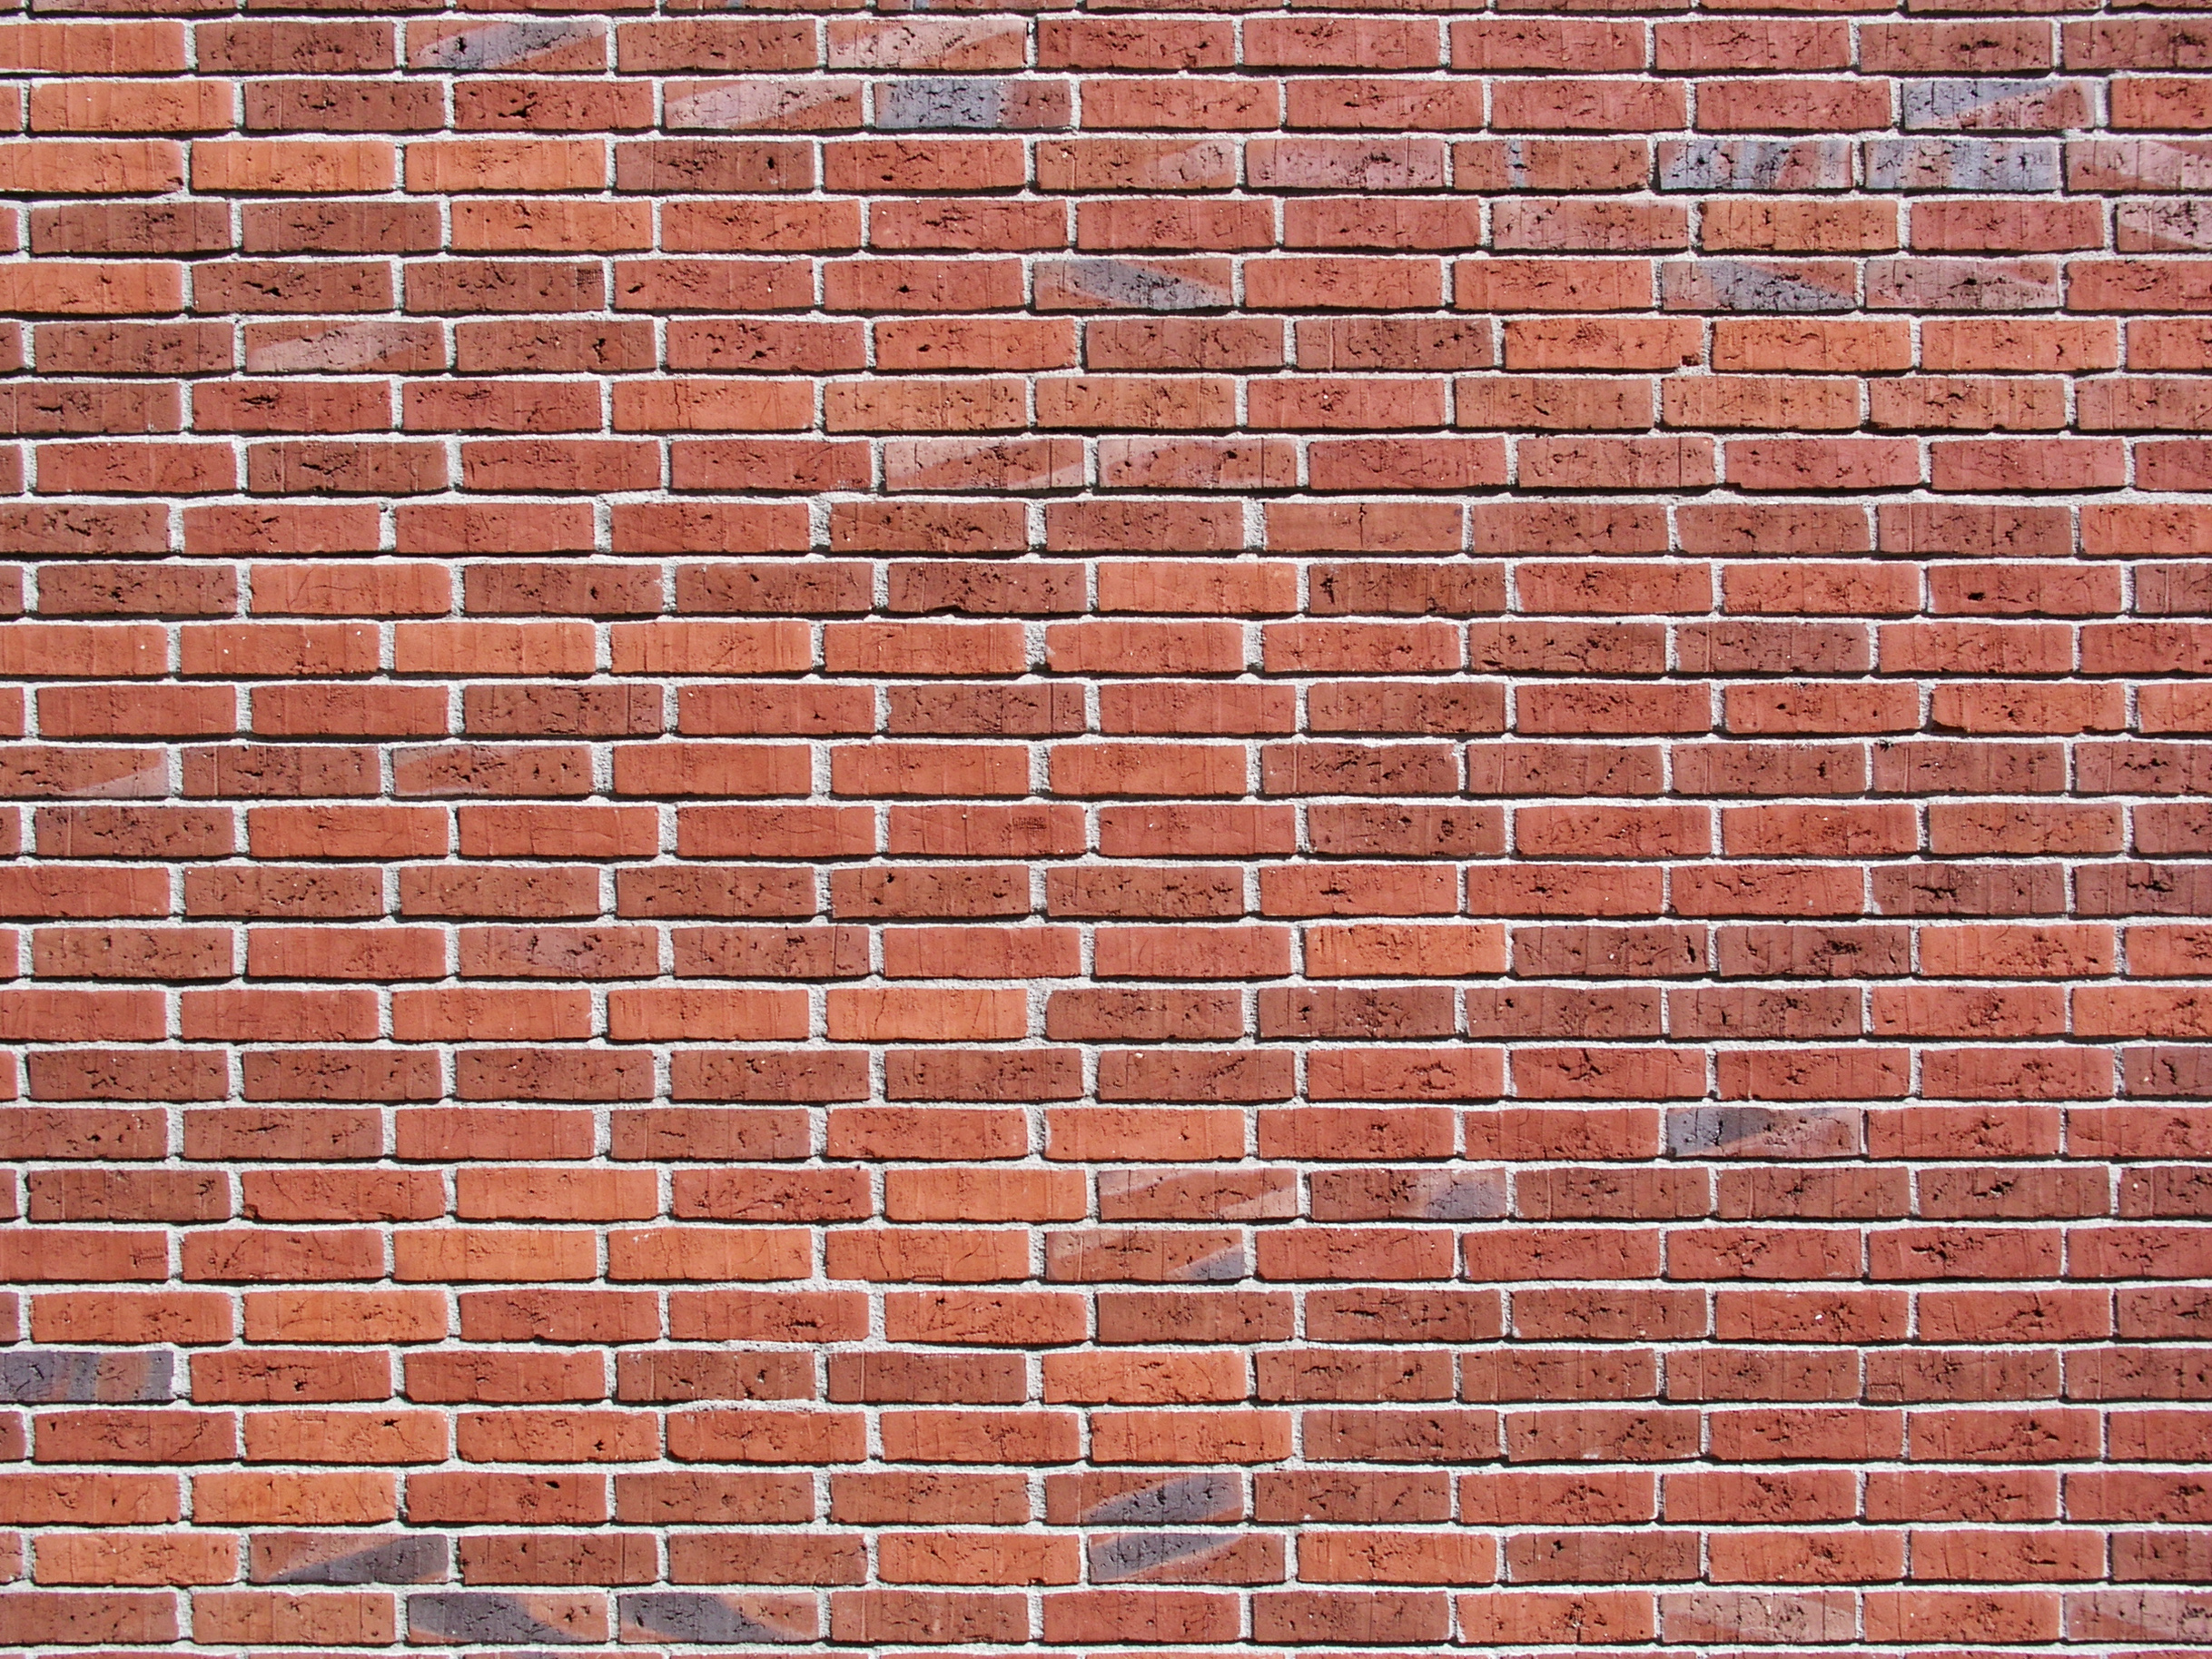 File:Solna Brick wall Stretcher bond variation1.jpg - Wikimedia Commons